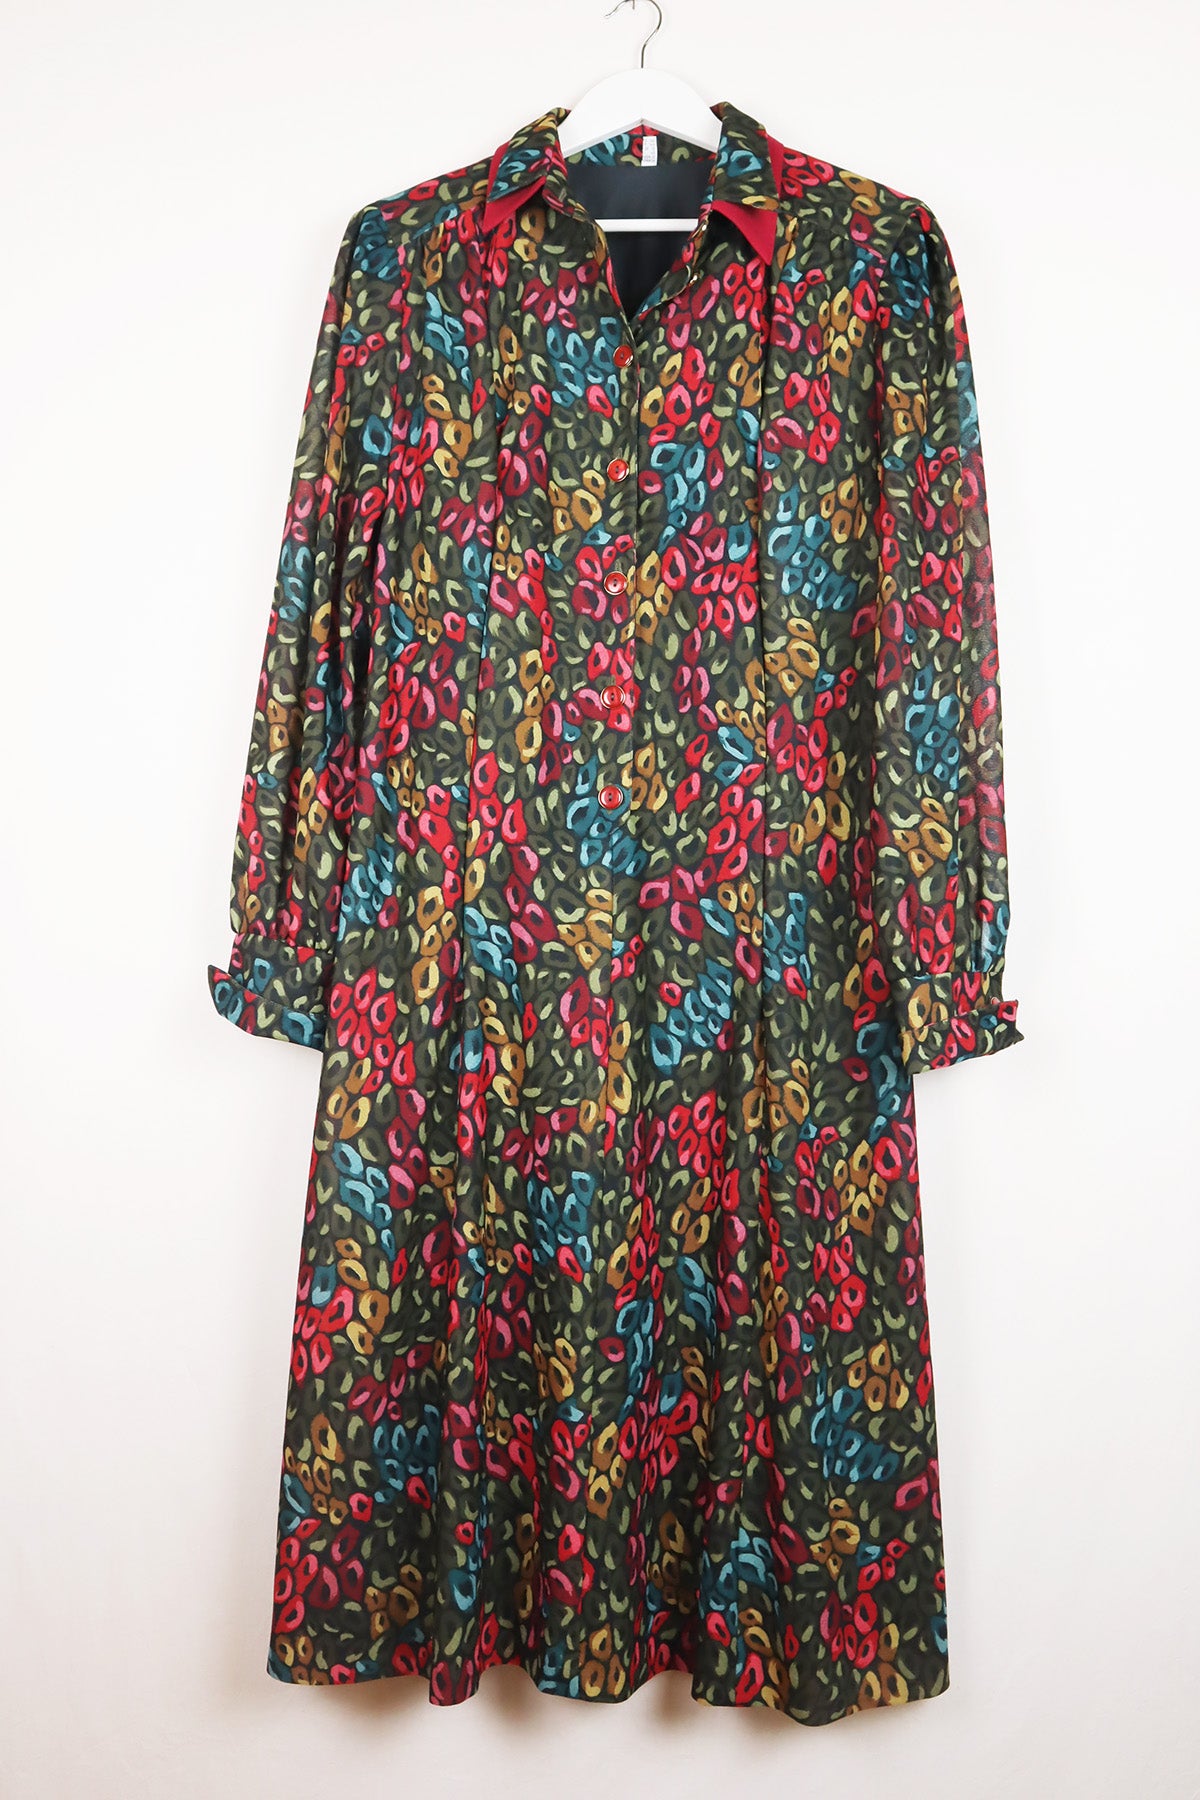 Kleid Vintage Bunte Kreise ( Gr. M/L )